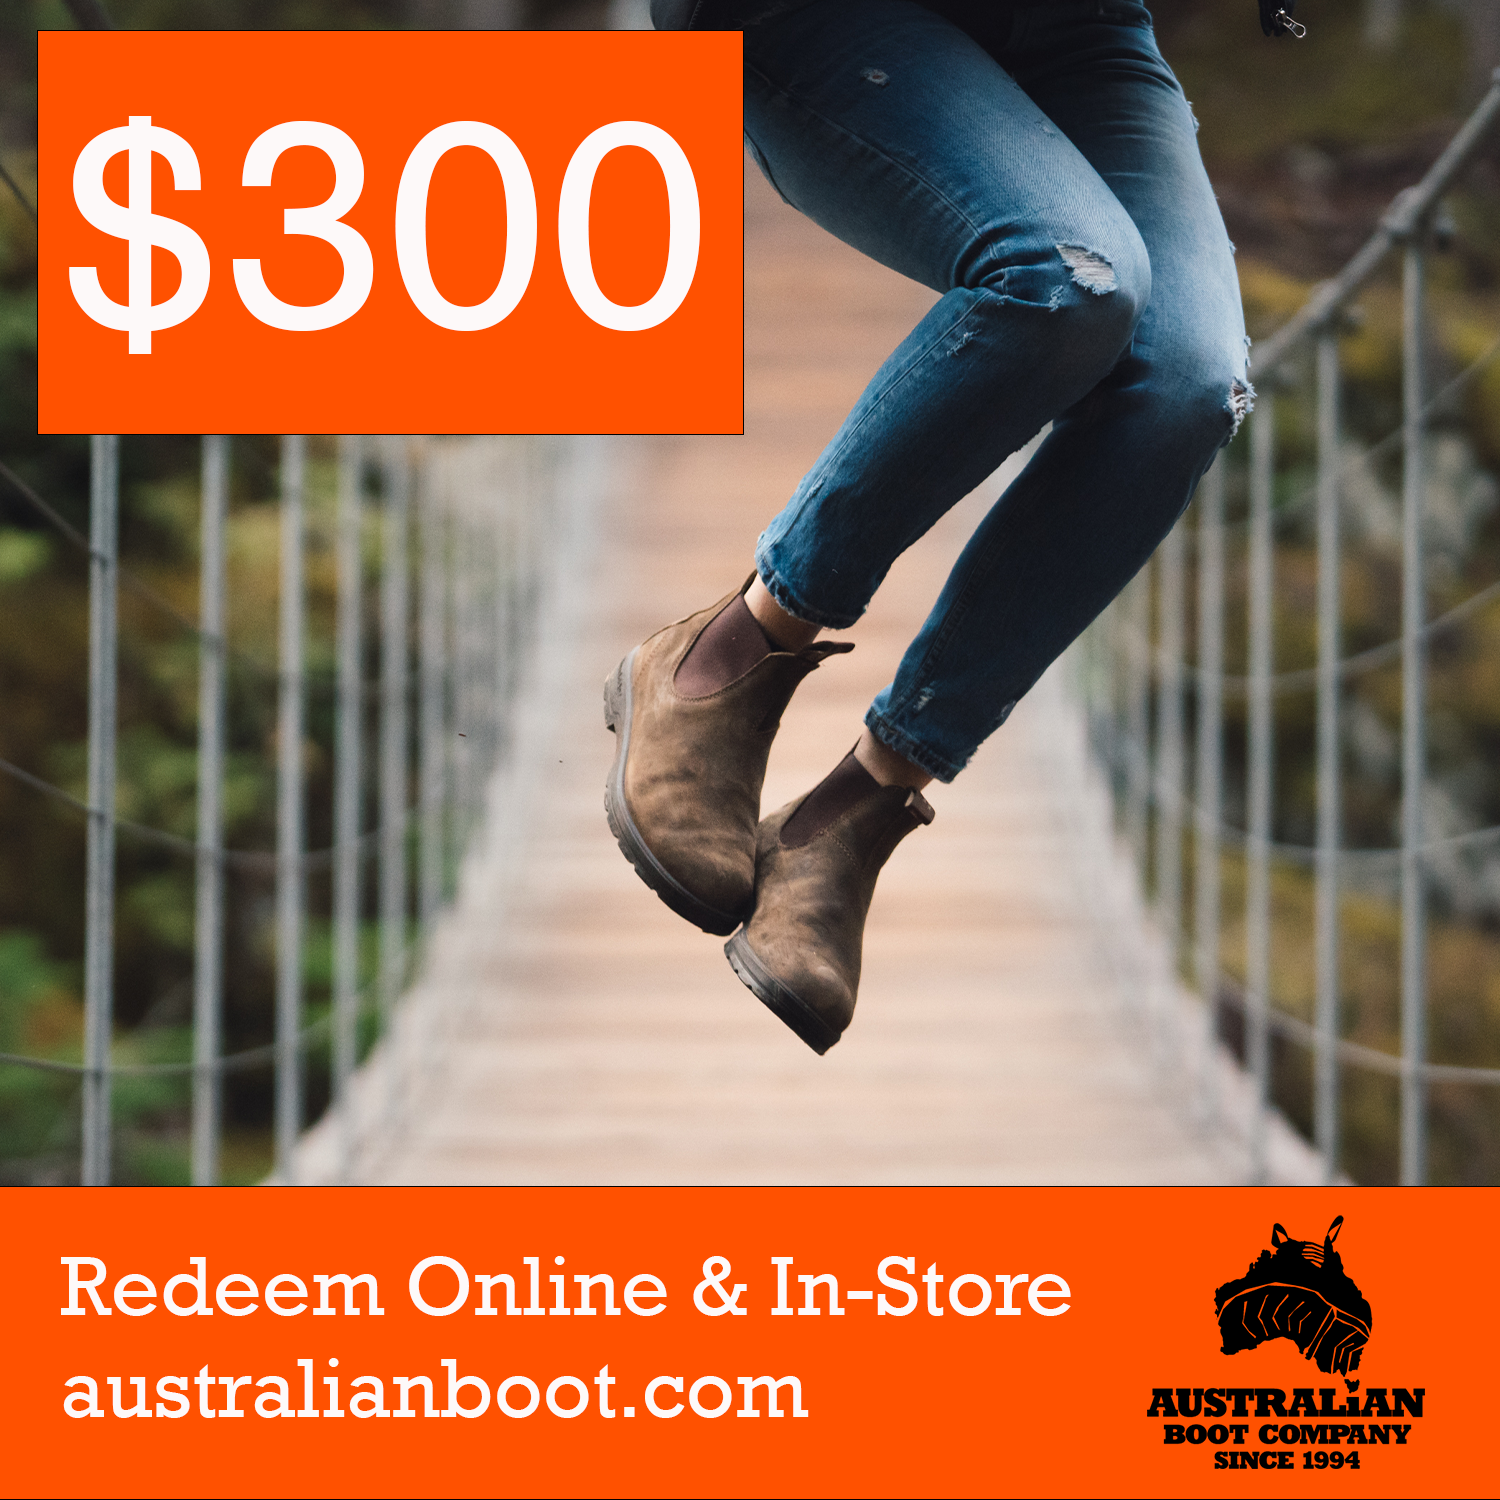 Australian Boot Company $300 Gift Card